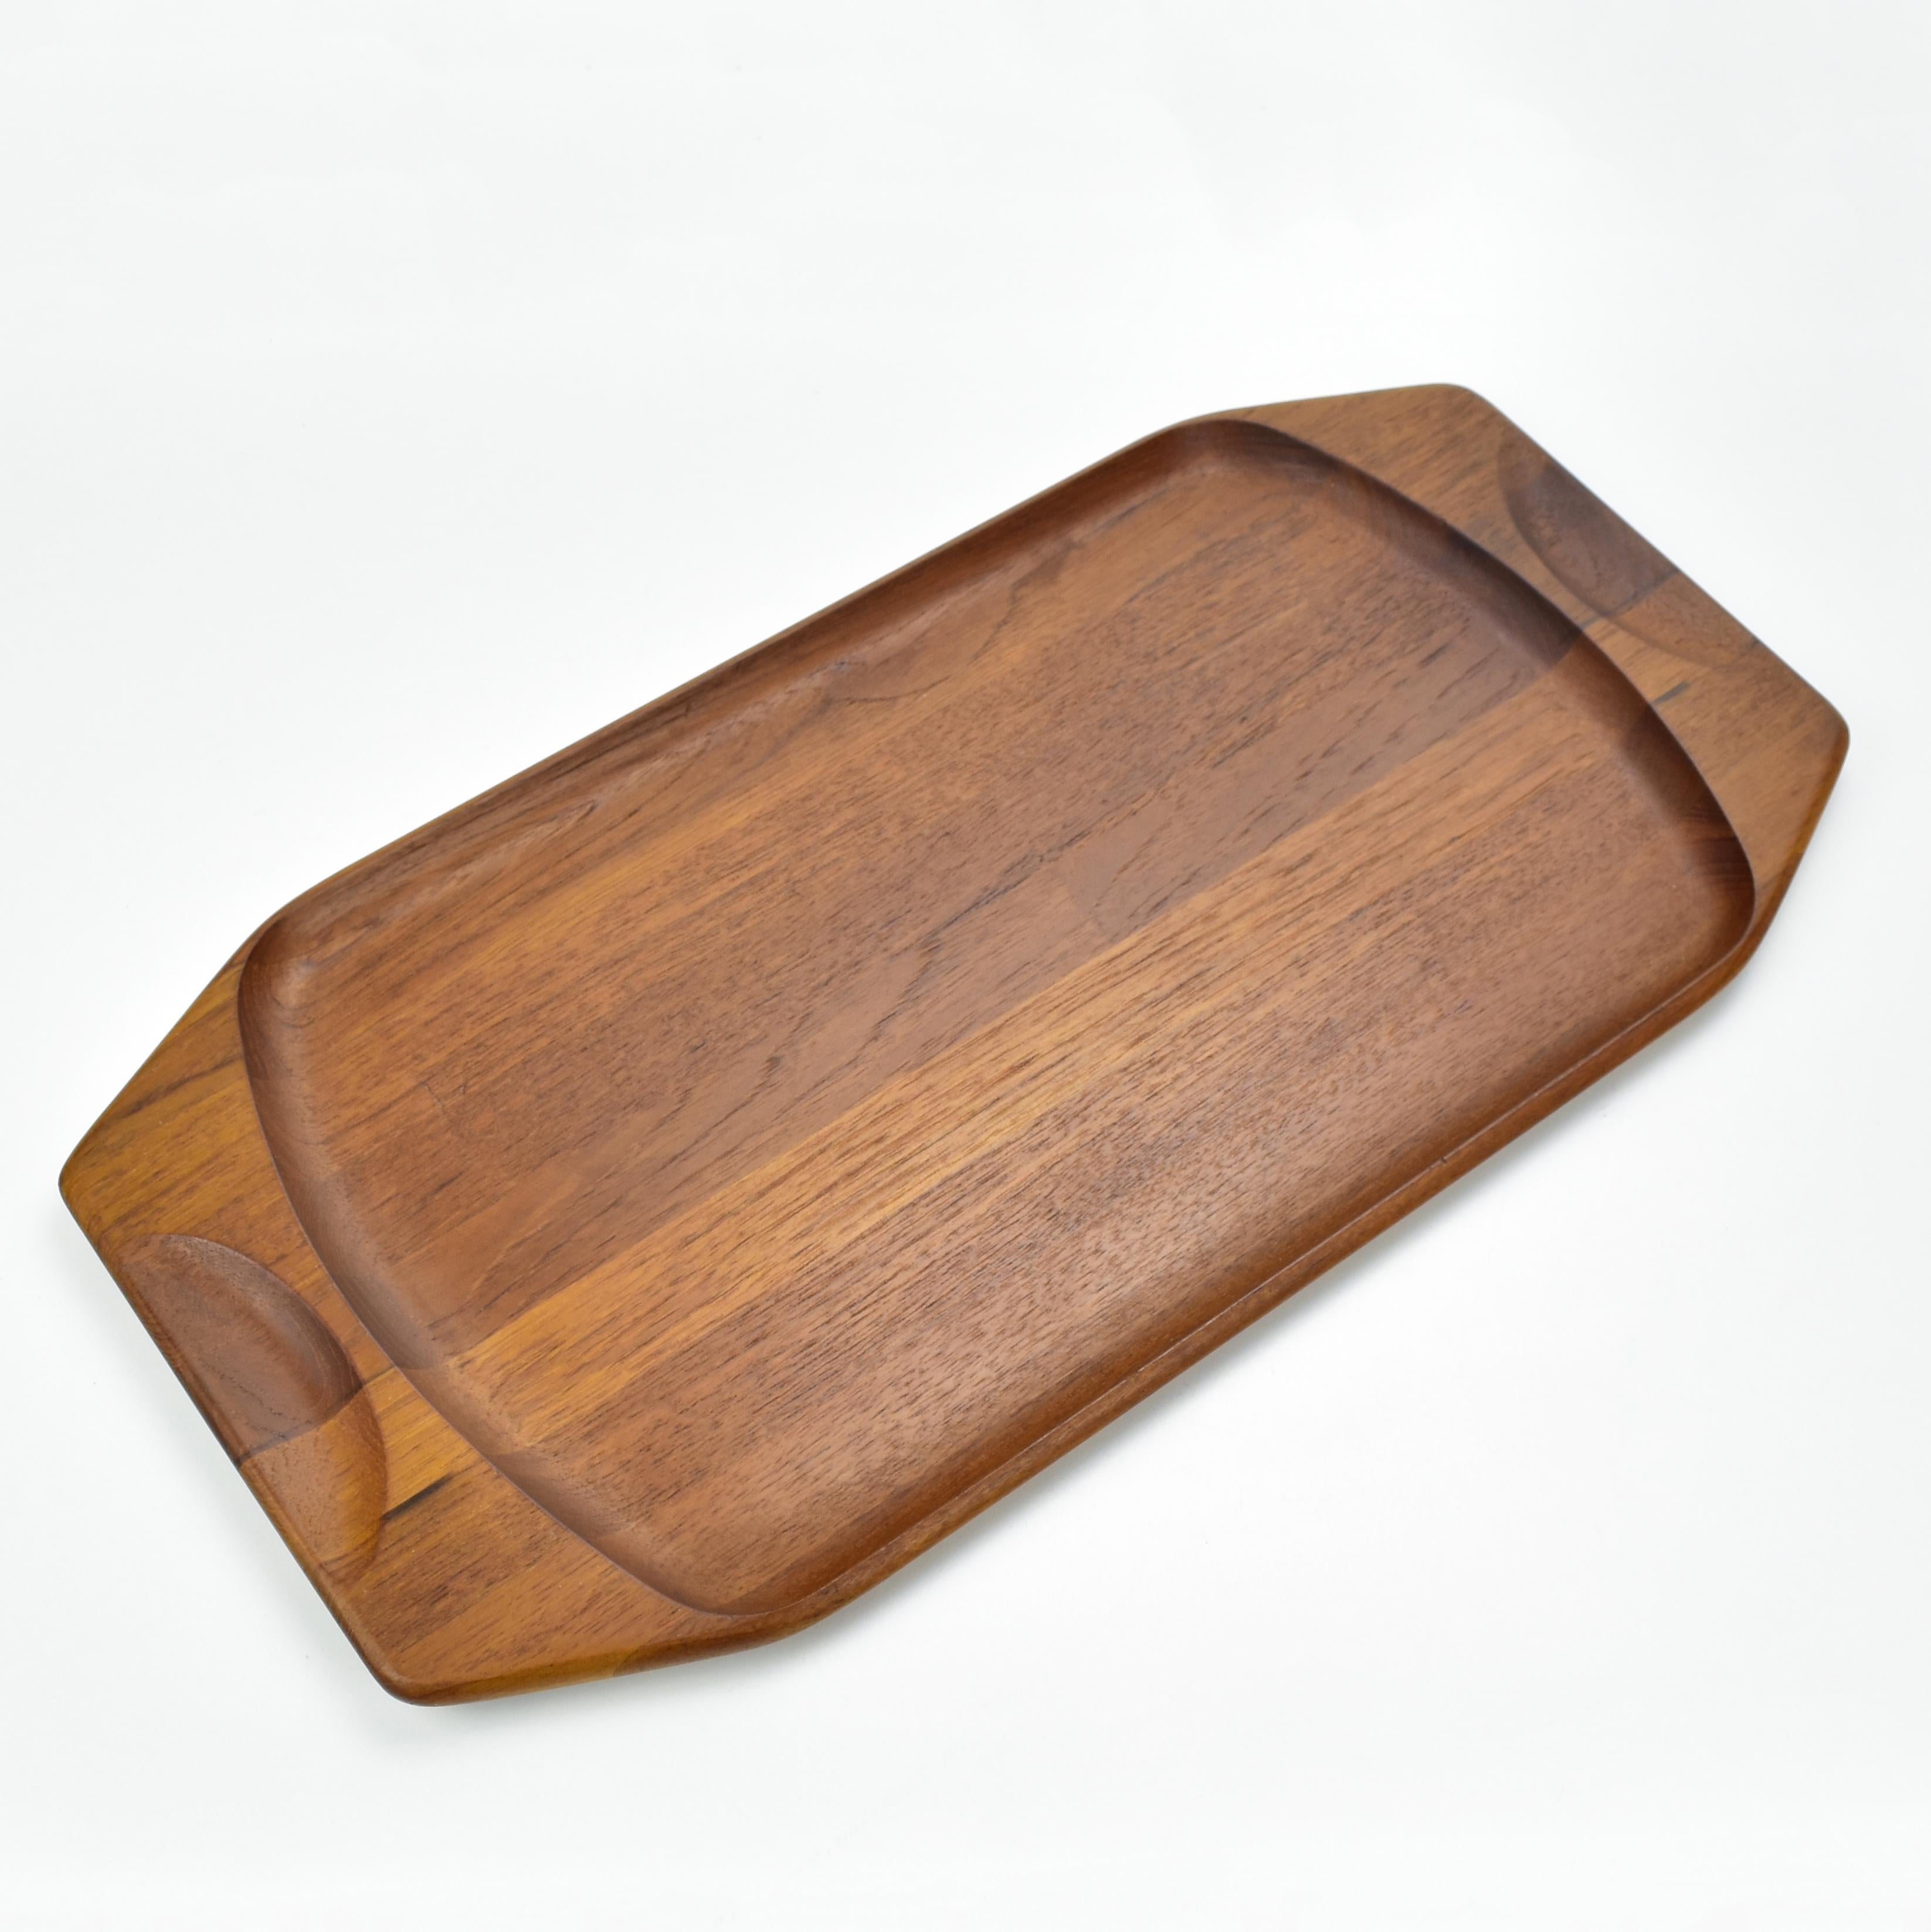 Mid-Century Modern 1950s Danish Modern Design Teak Wood Serving Tray by Jens Quistgaard Dansk MCM For Sale